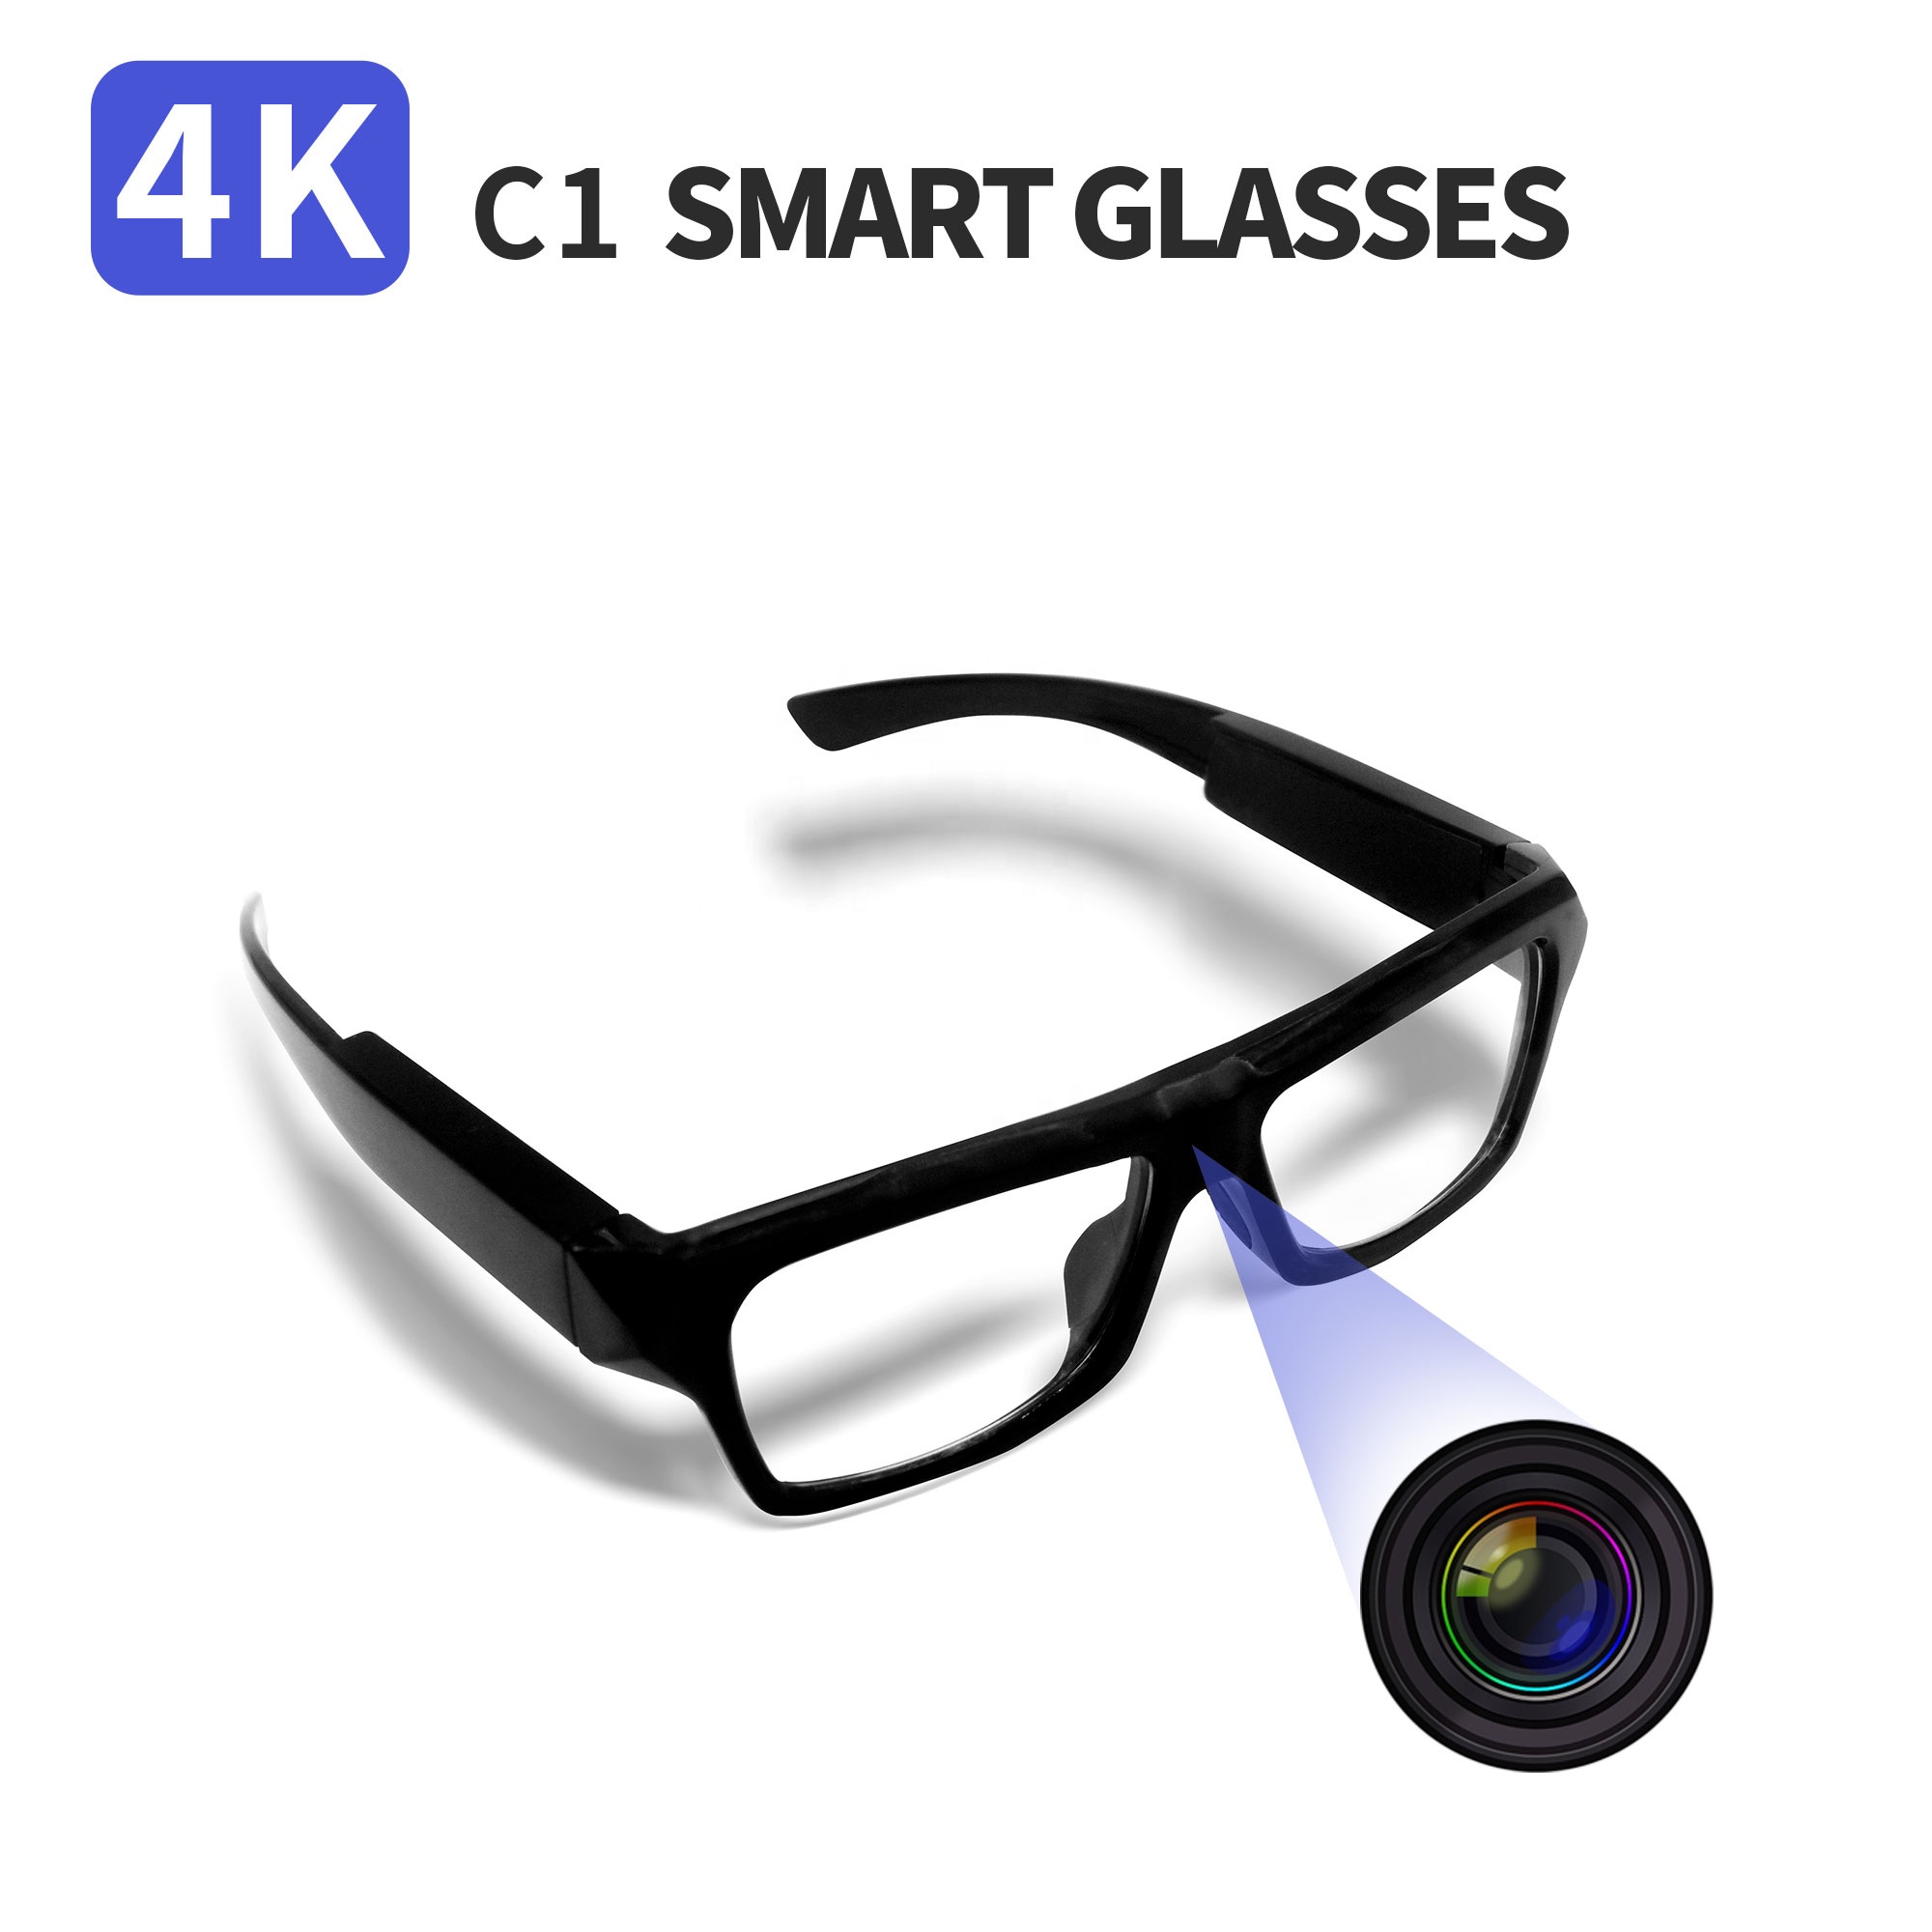 4k camera glasses SE11